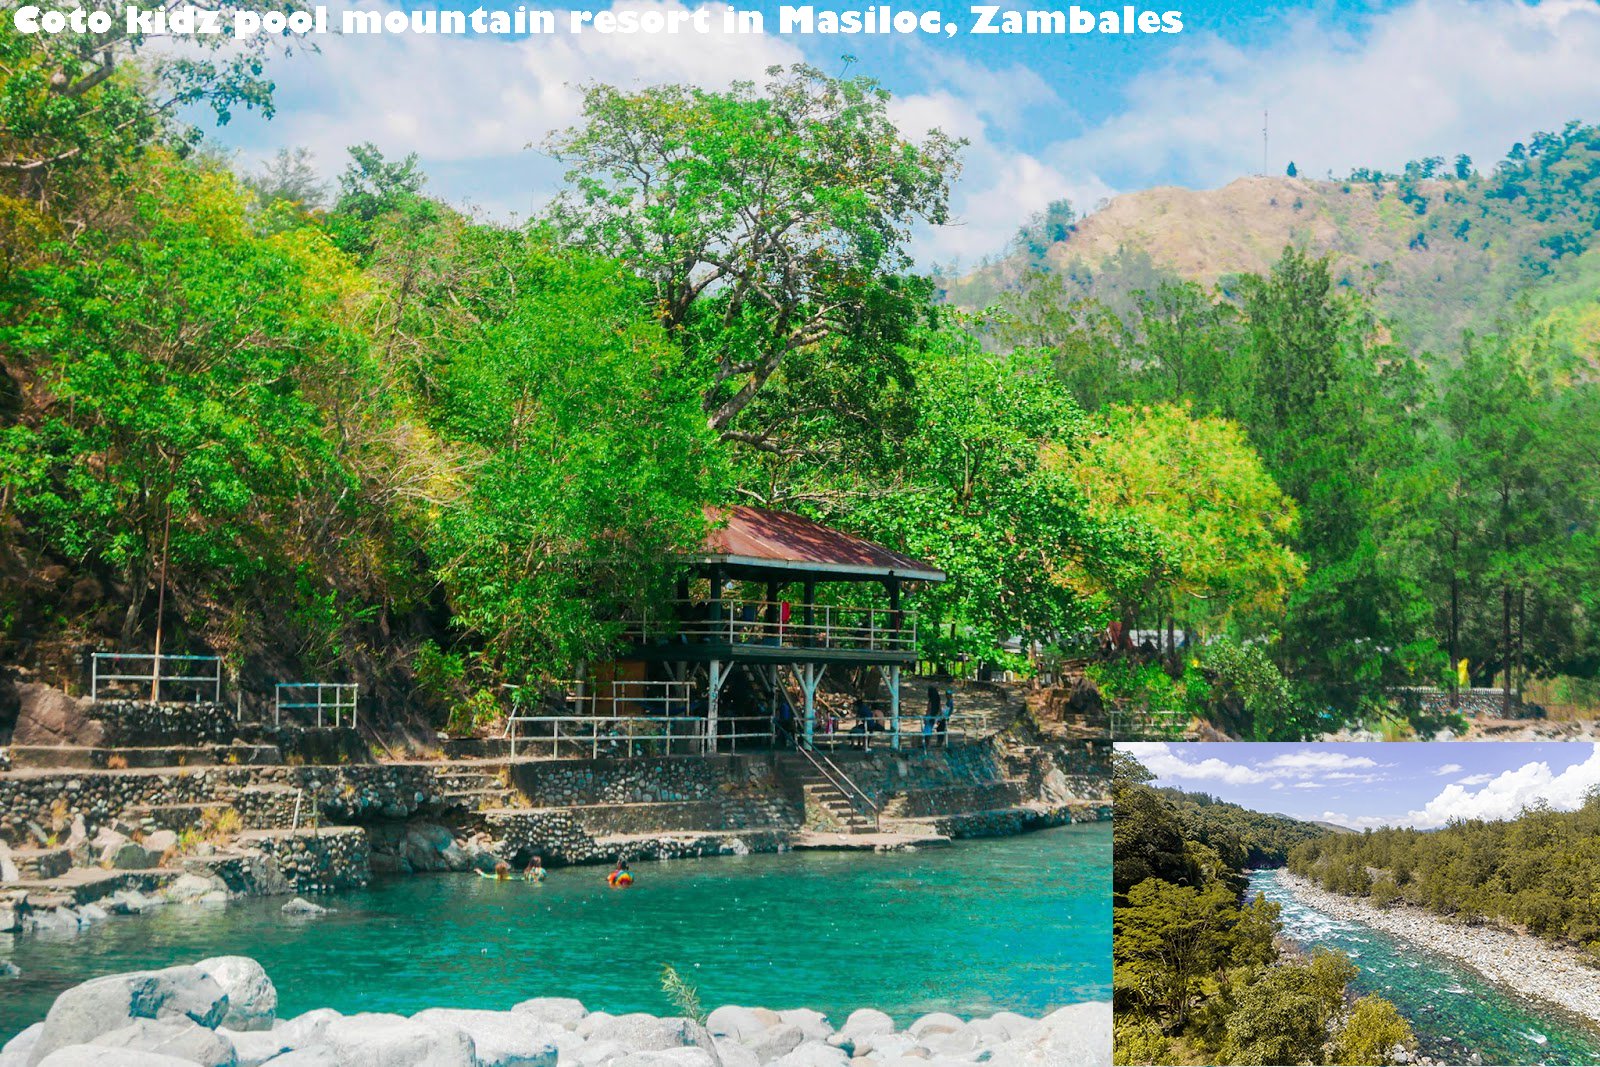 Coto kidz pool mountain resort in Masinloc, Zambales tourist spot